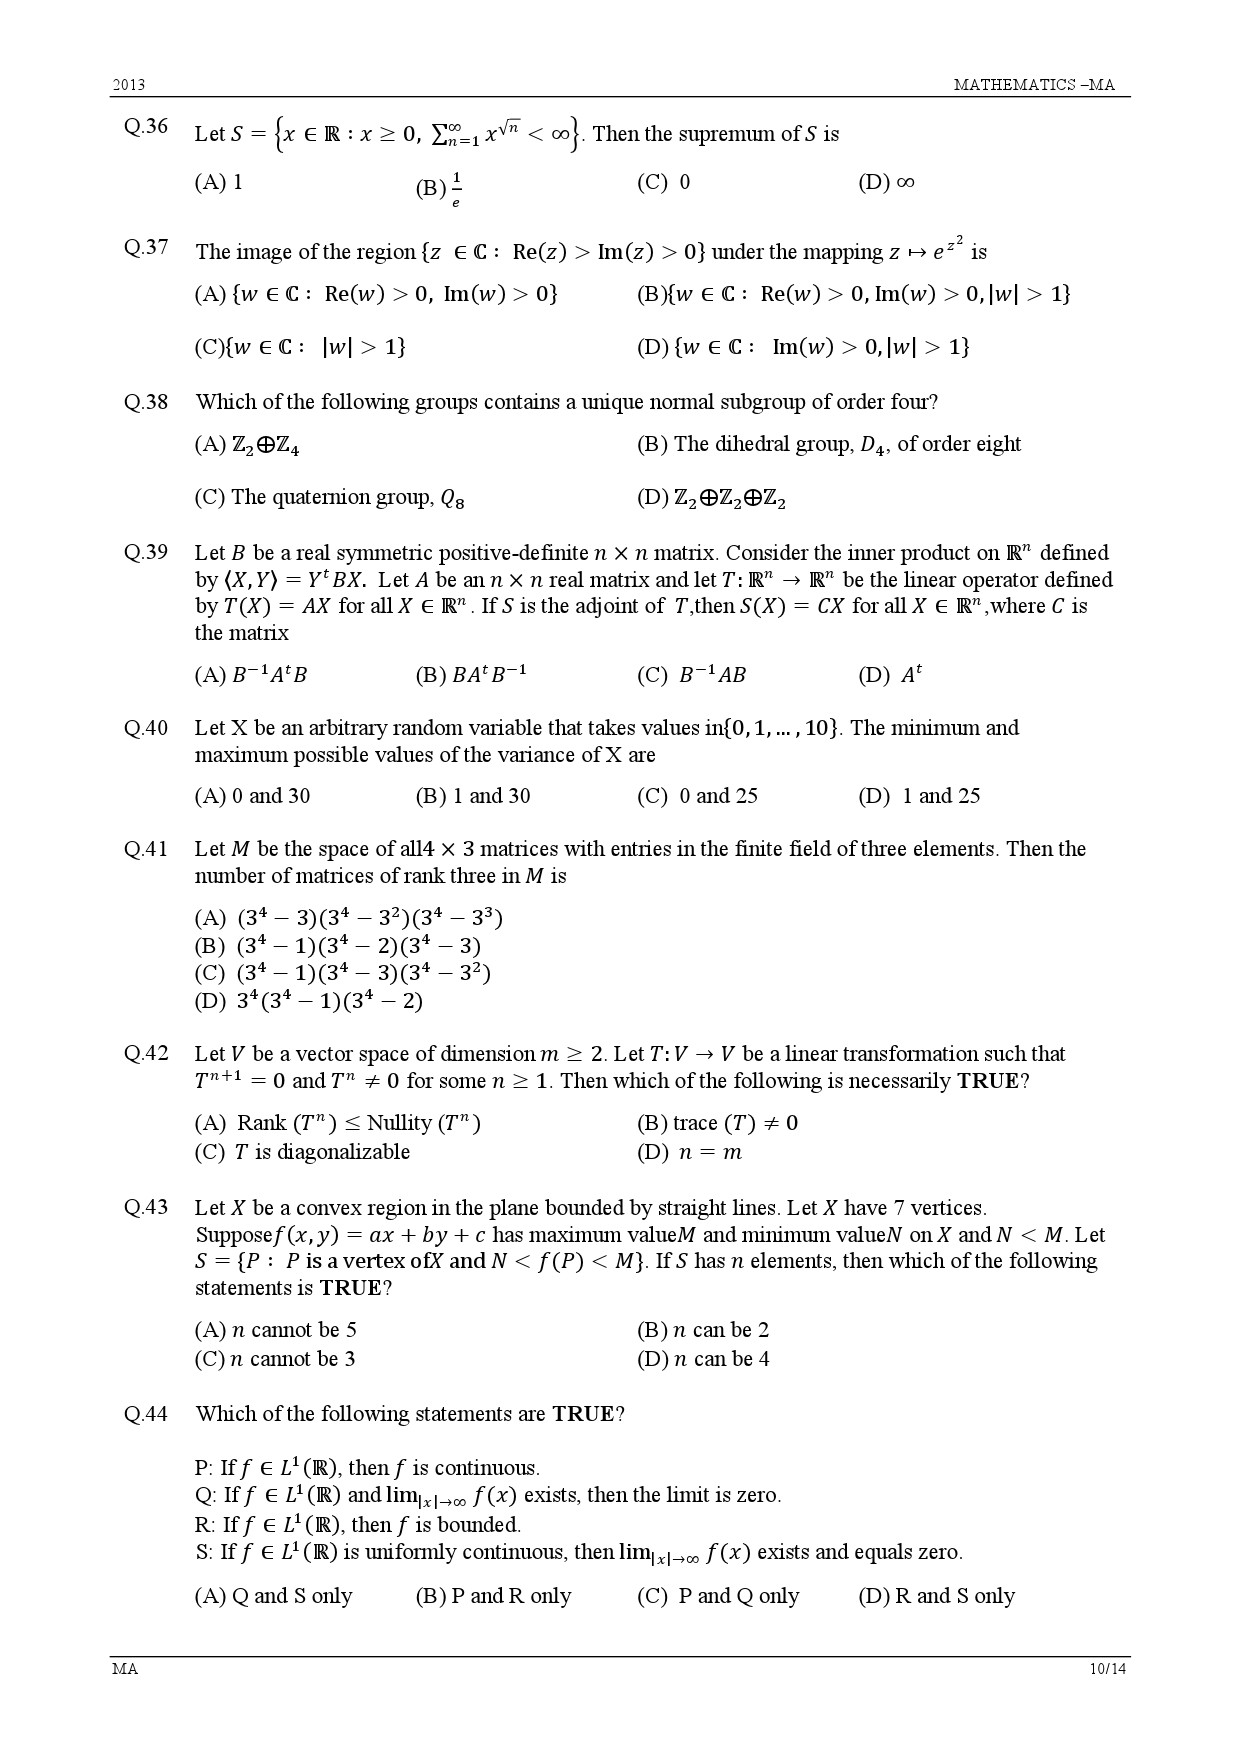 GATE Exam Question Paper 2013 Mathematics 10